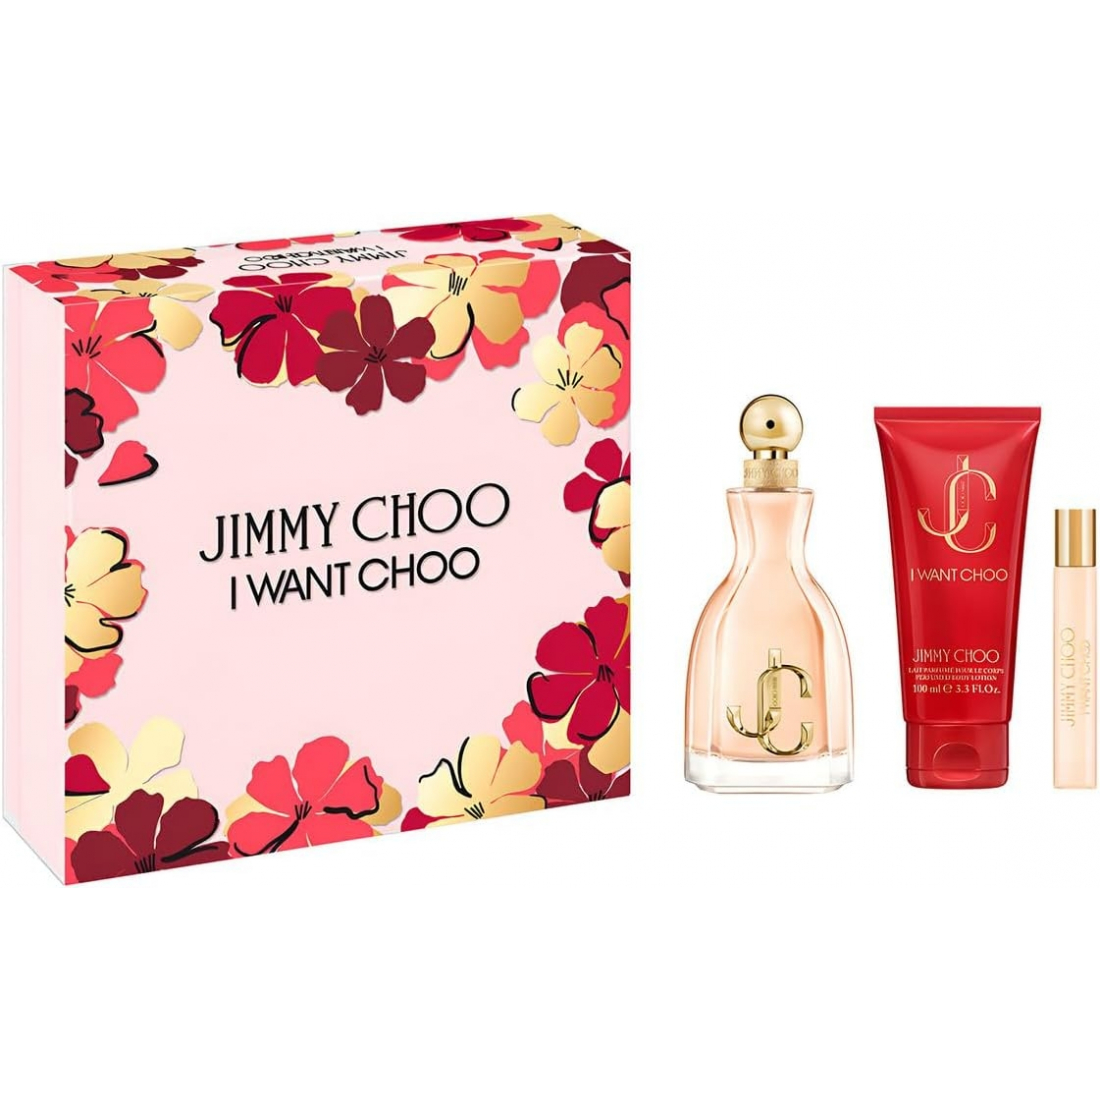 'I Want Choo' Perfume Set - 3 Pieces